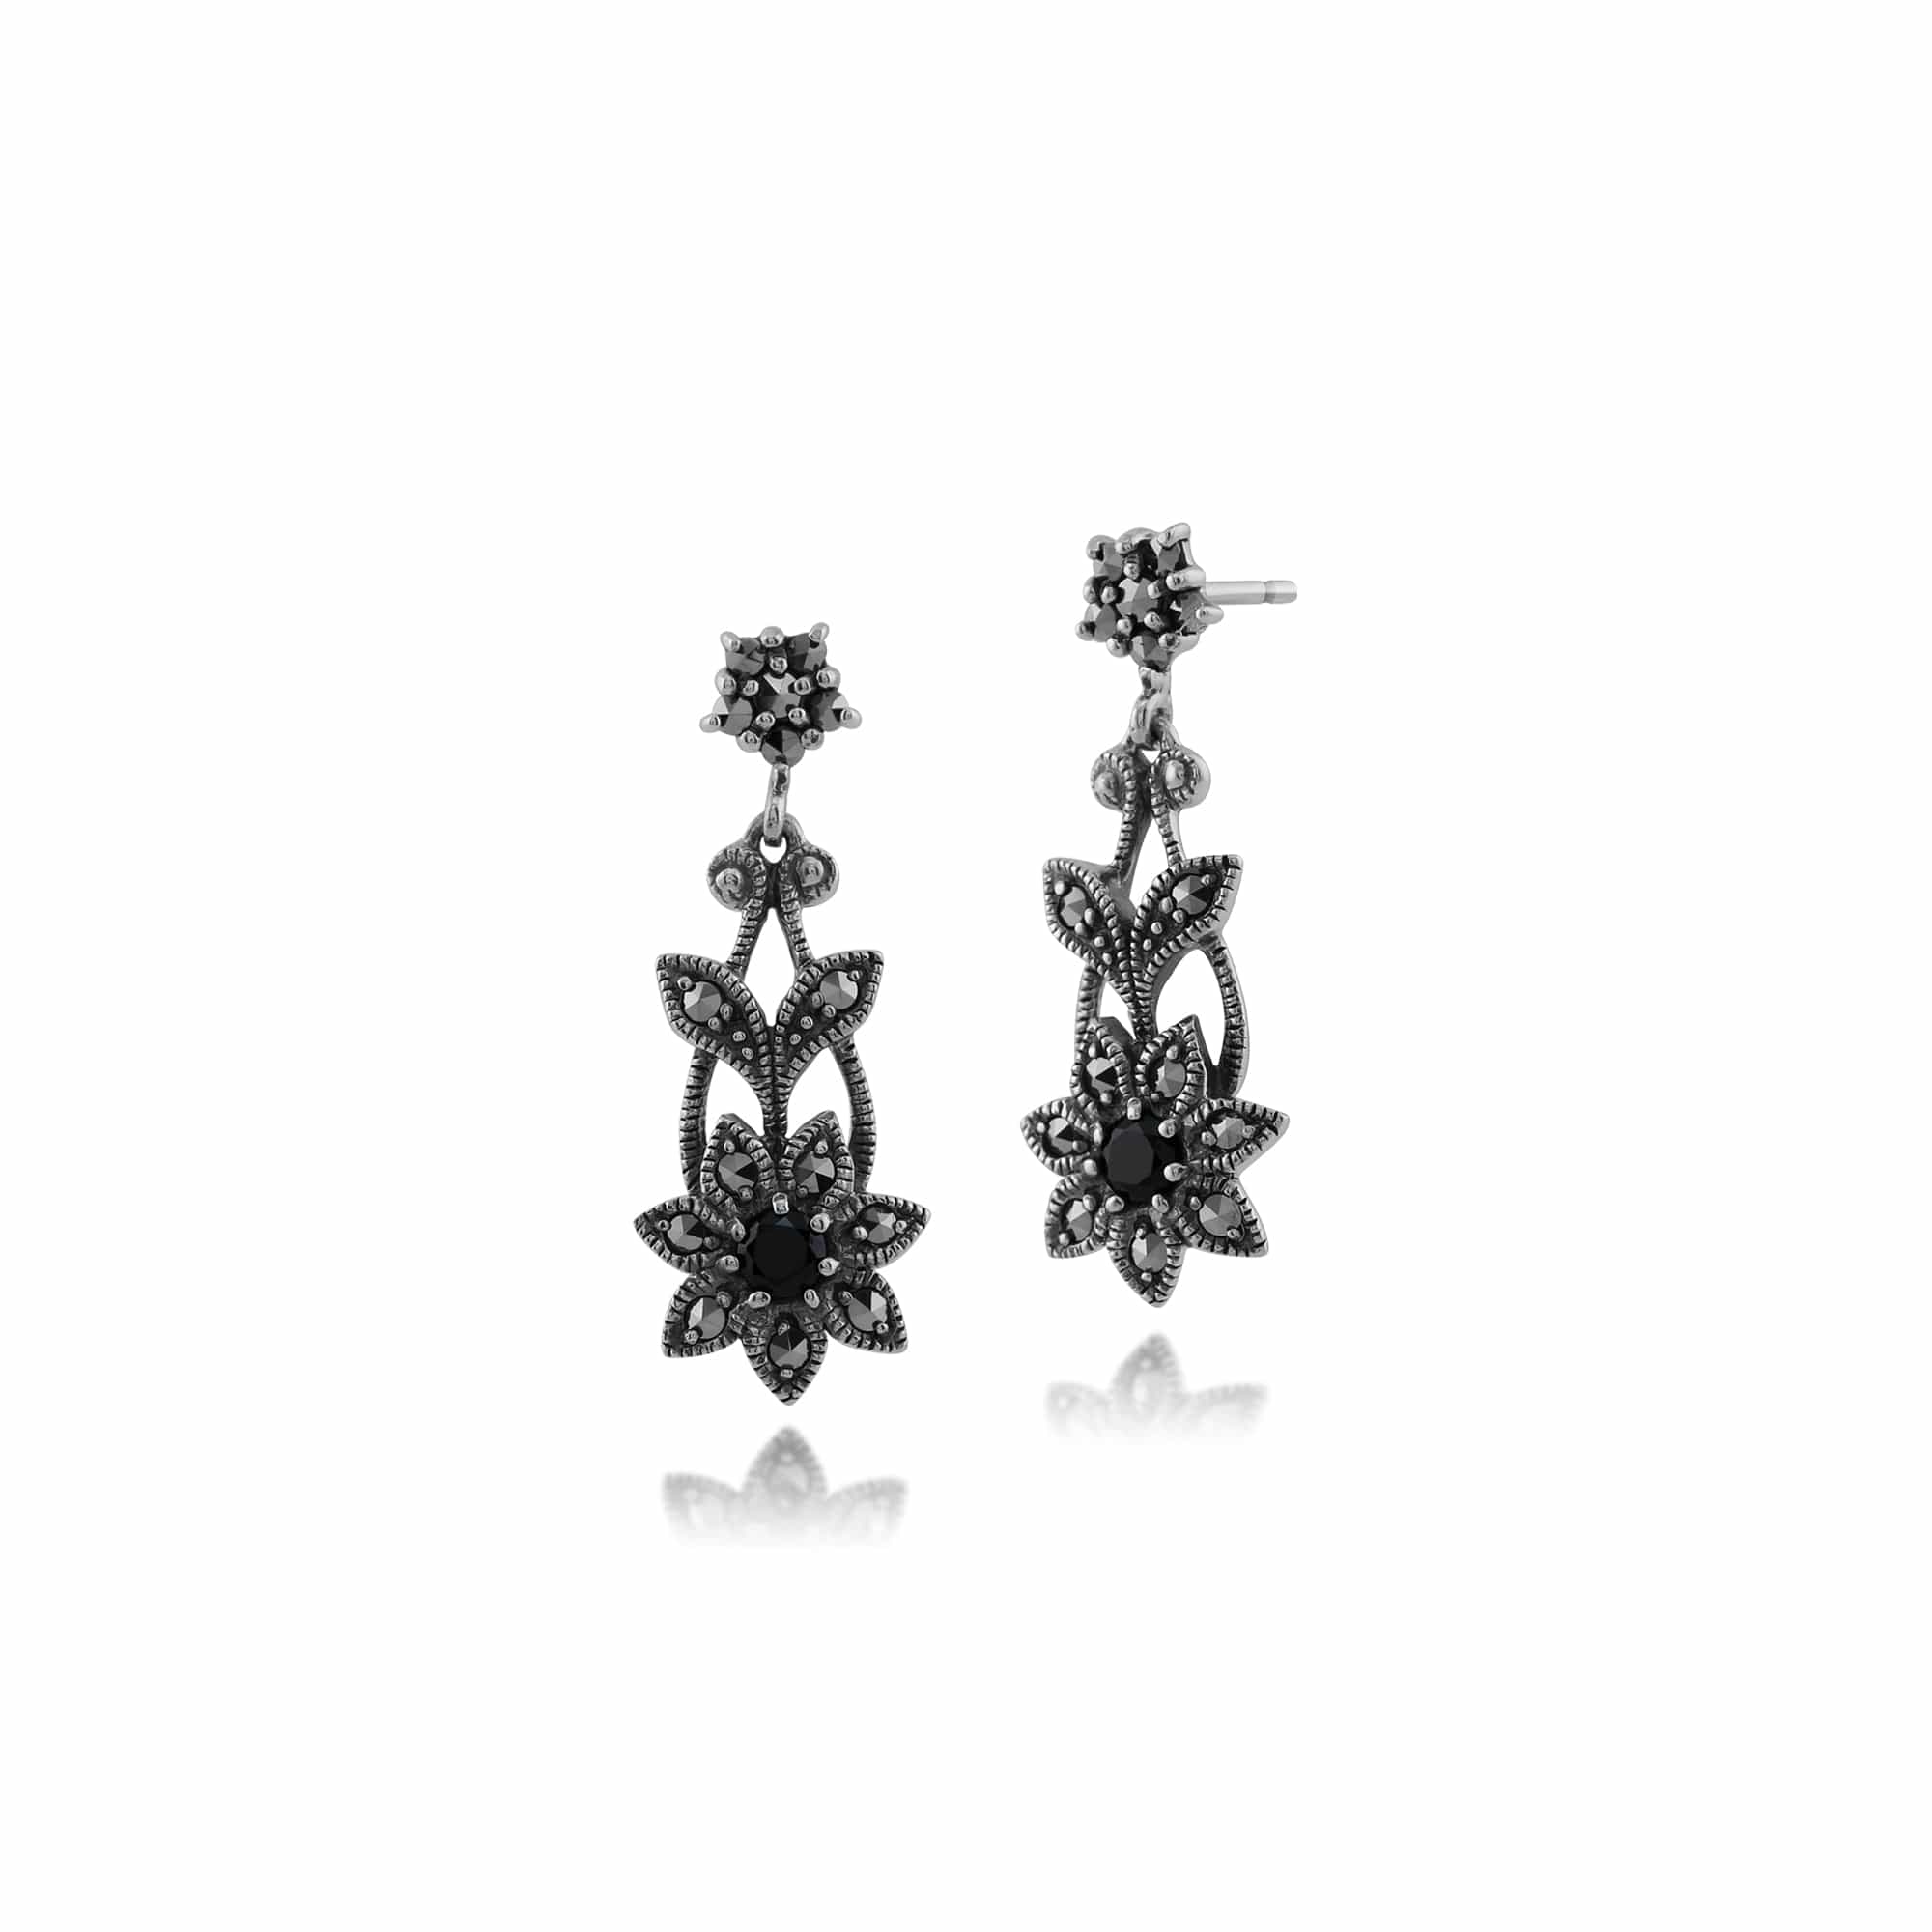 Art Nouveau Style Black Spinel & Marcasite Floral Drop Earrings in 925 Sterling Silver - Gemondo